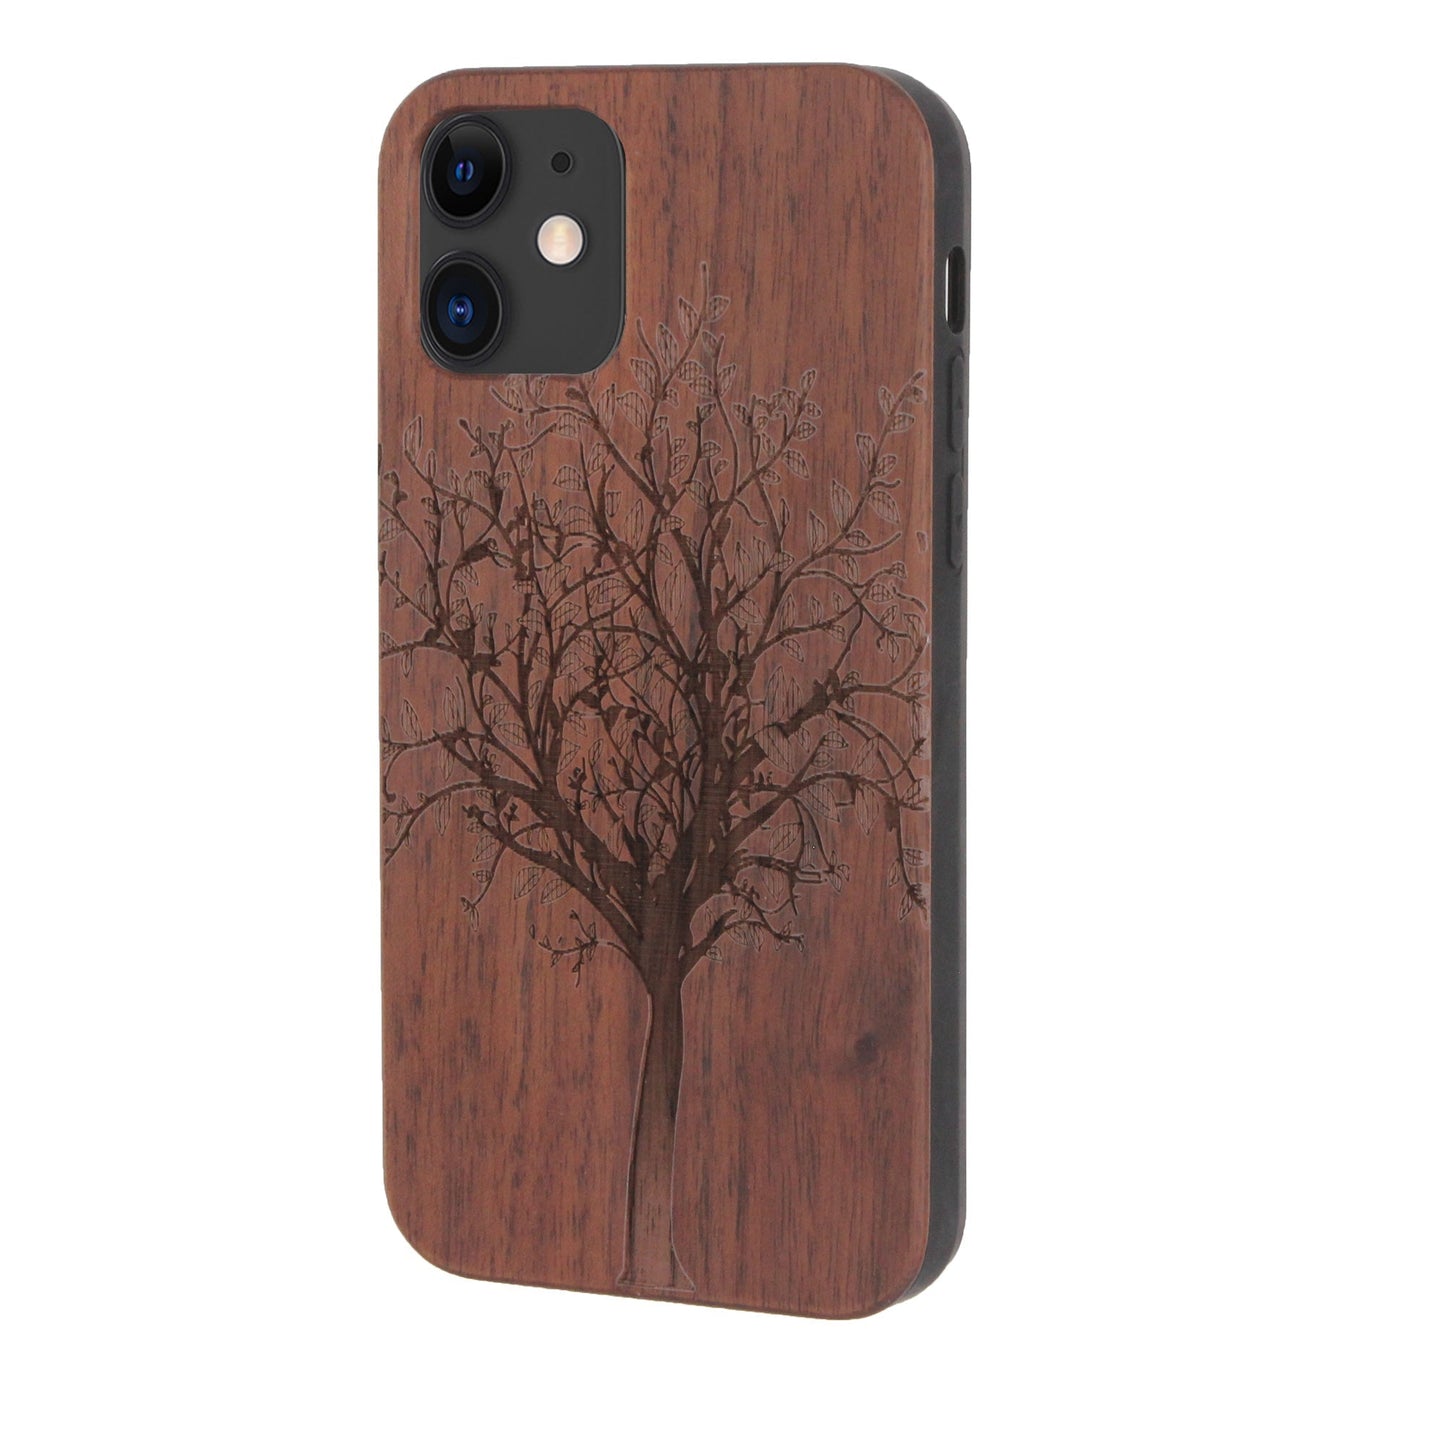 Lebensbaum Eden case made of walnut wood for iPhone 11